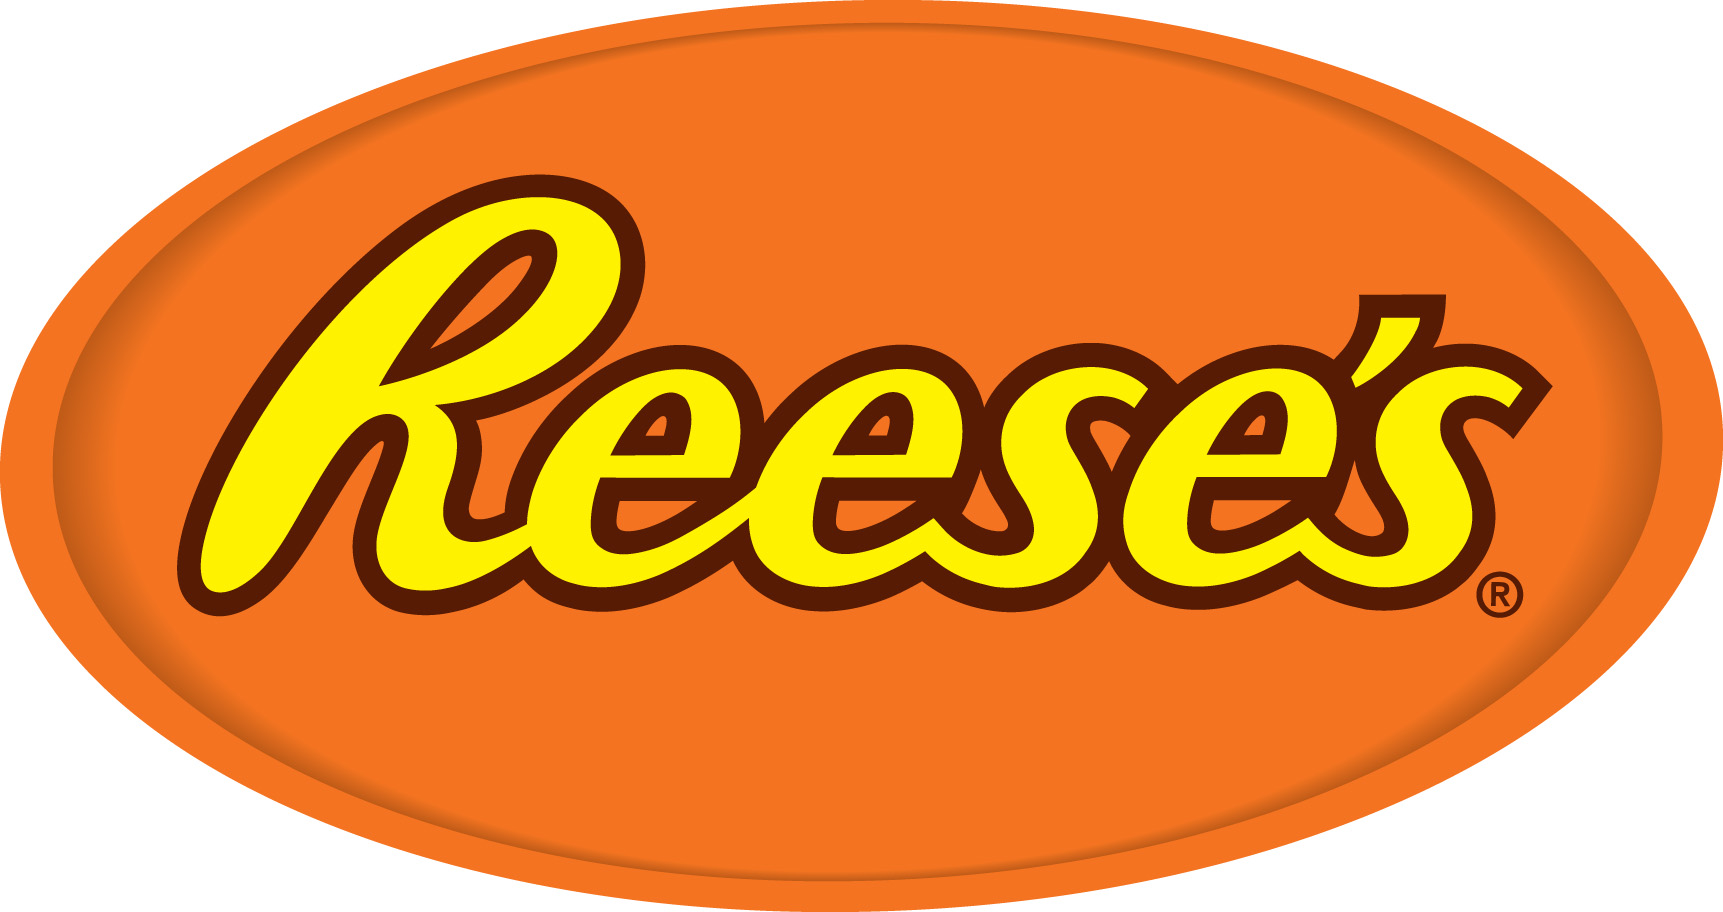 Reese's pieces xx